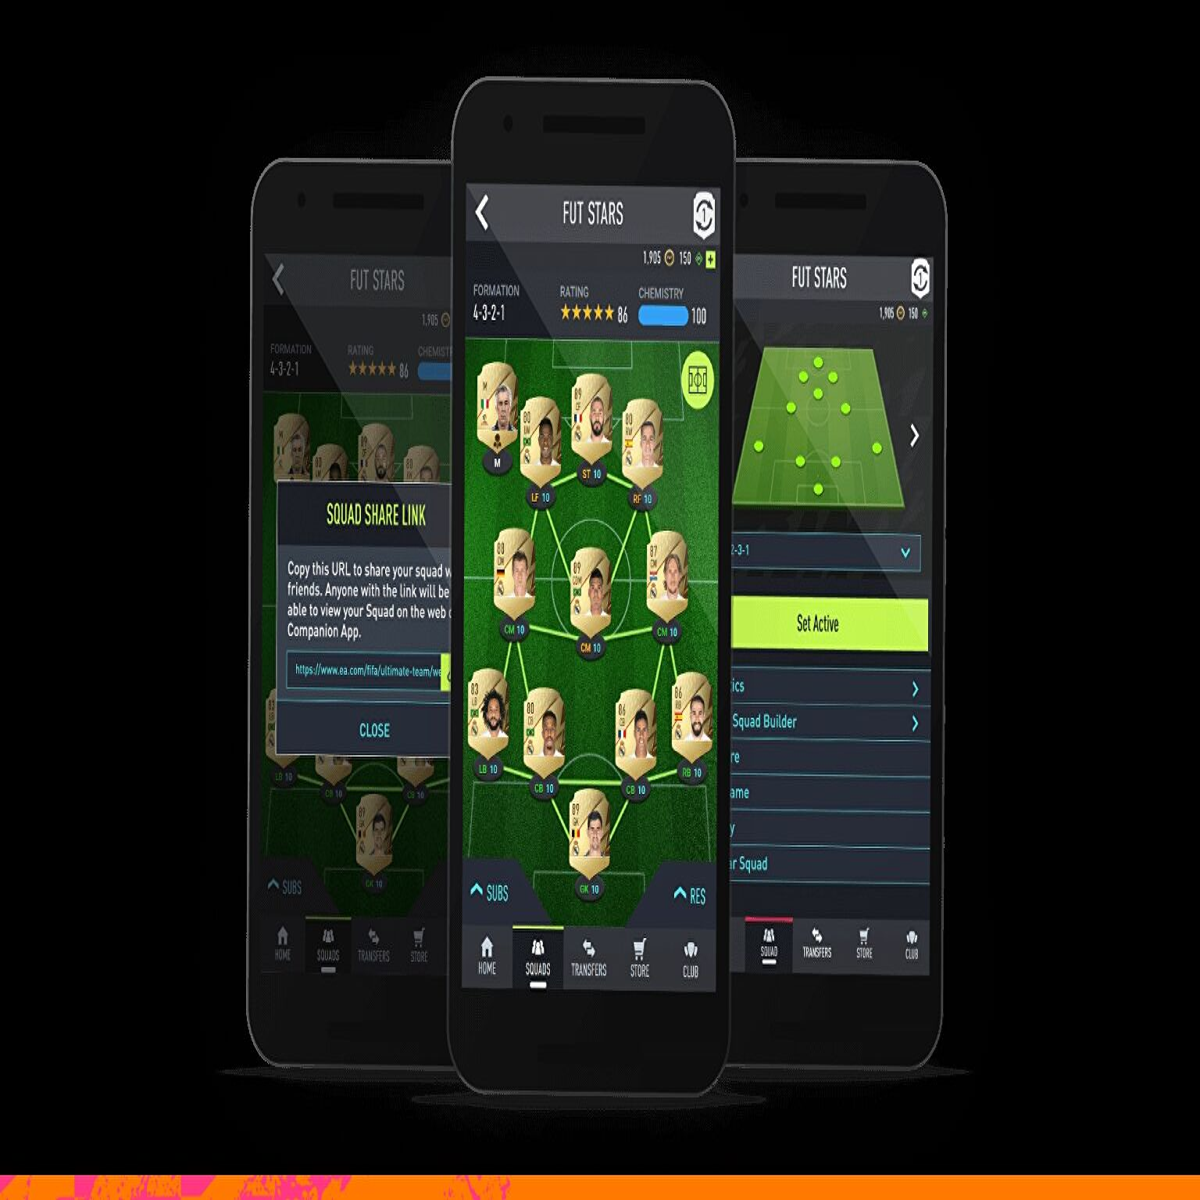 FIFA 23 Ultimate Team - Web App Companion - como aceder